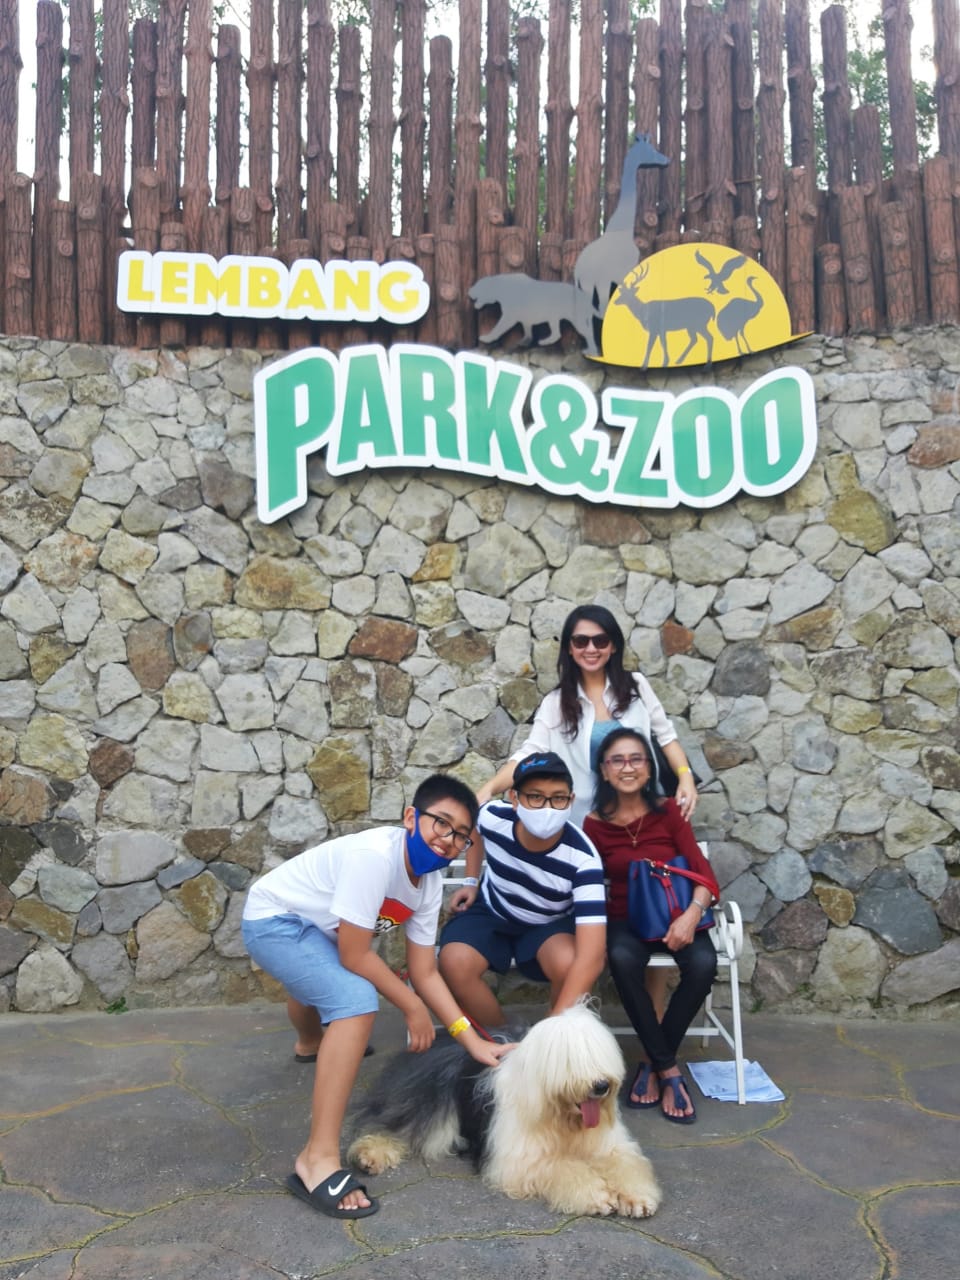 Lembang park zoo punya siapa